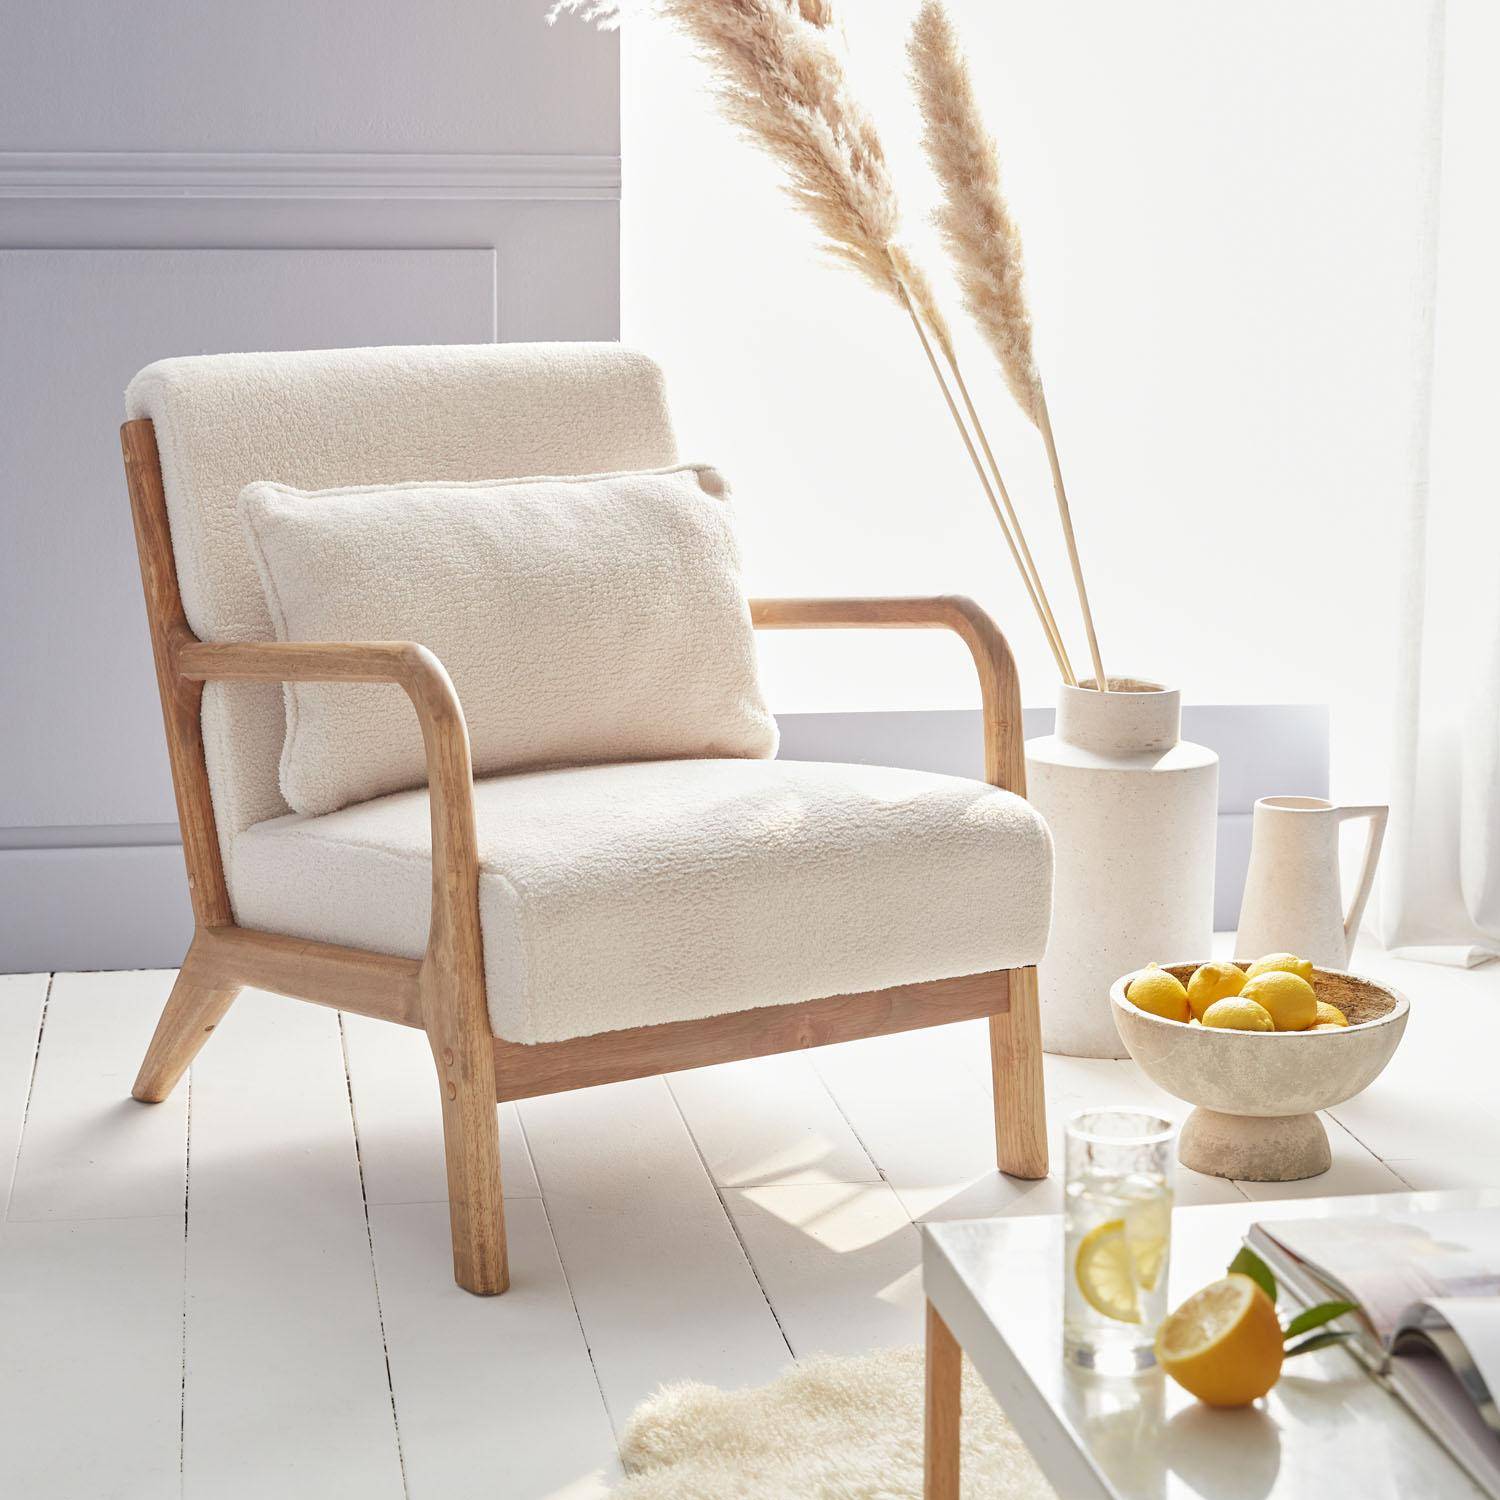 Poltrona di design in legno e tessuto bouclé, 1 seduta fissa diritta, gambe a compasso scandinave, beige,sweeek,Photo1